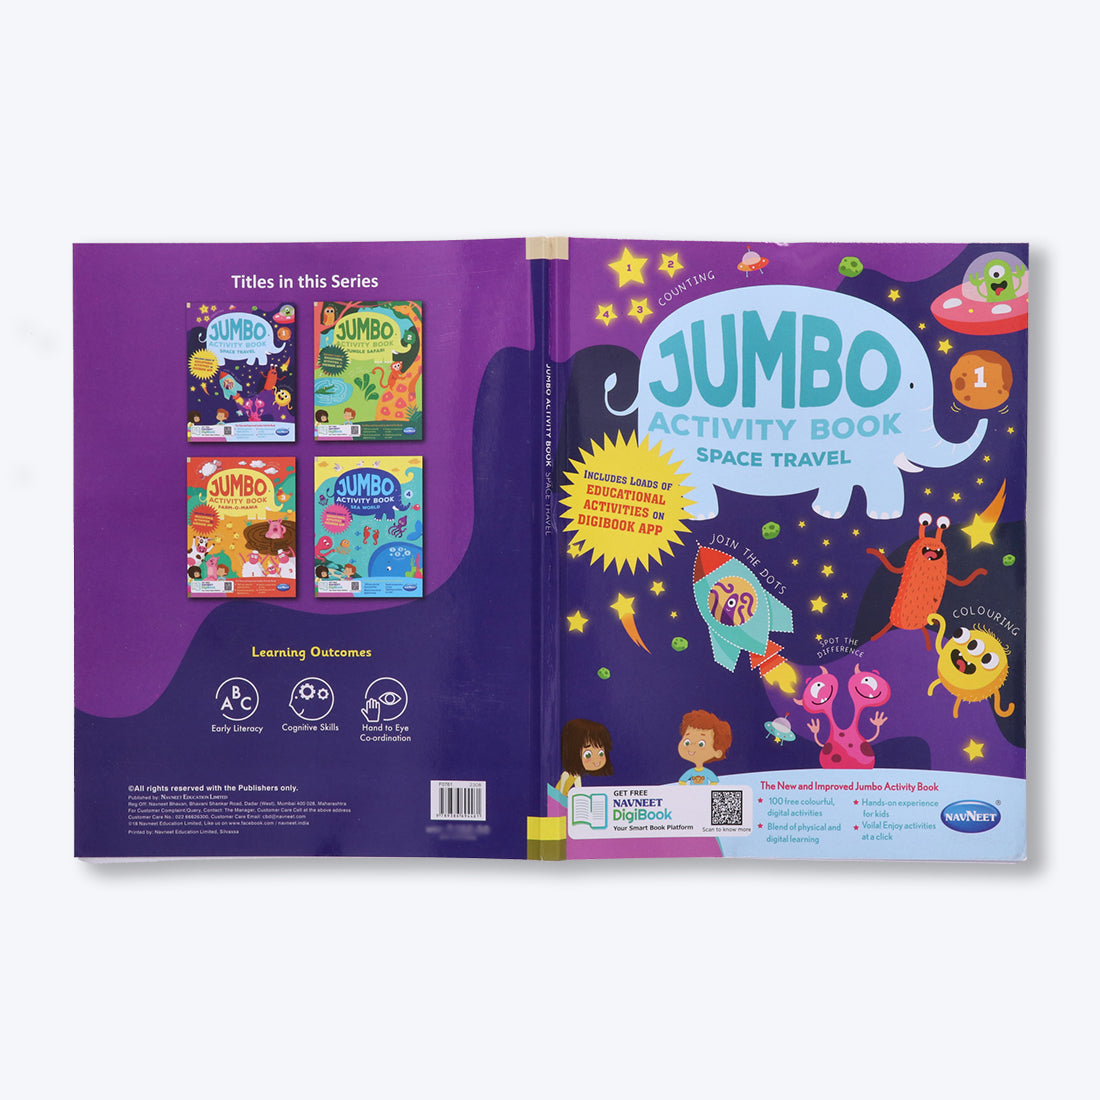 Navneet Jumbo Activity Book - I- Entertaining and relaxing activities for young children